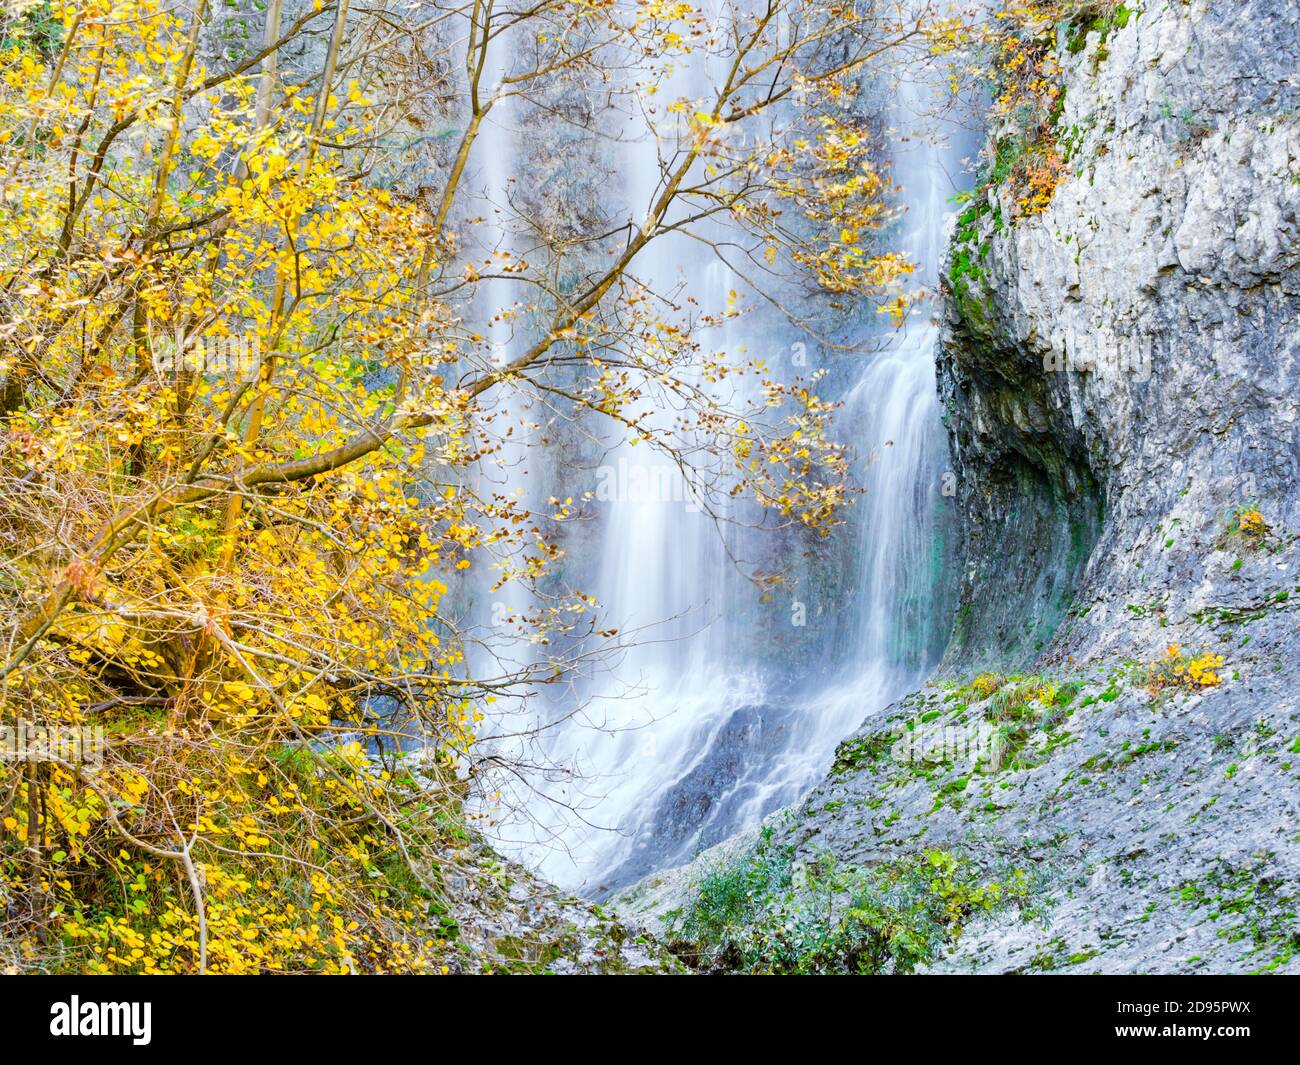 Benkovski slap waterfall near Pican in Croatia Europe Yellow-Green leaves vegetation foliage Stock Photo